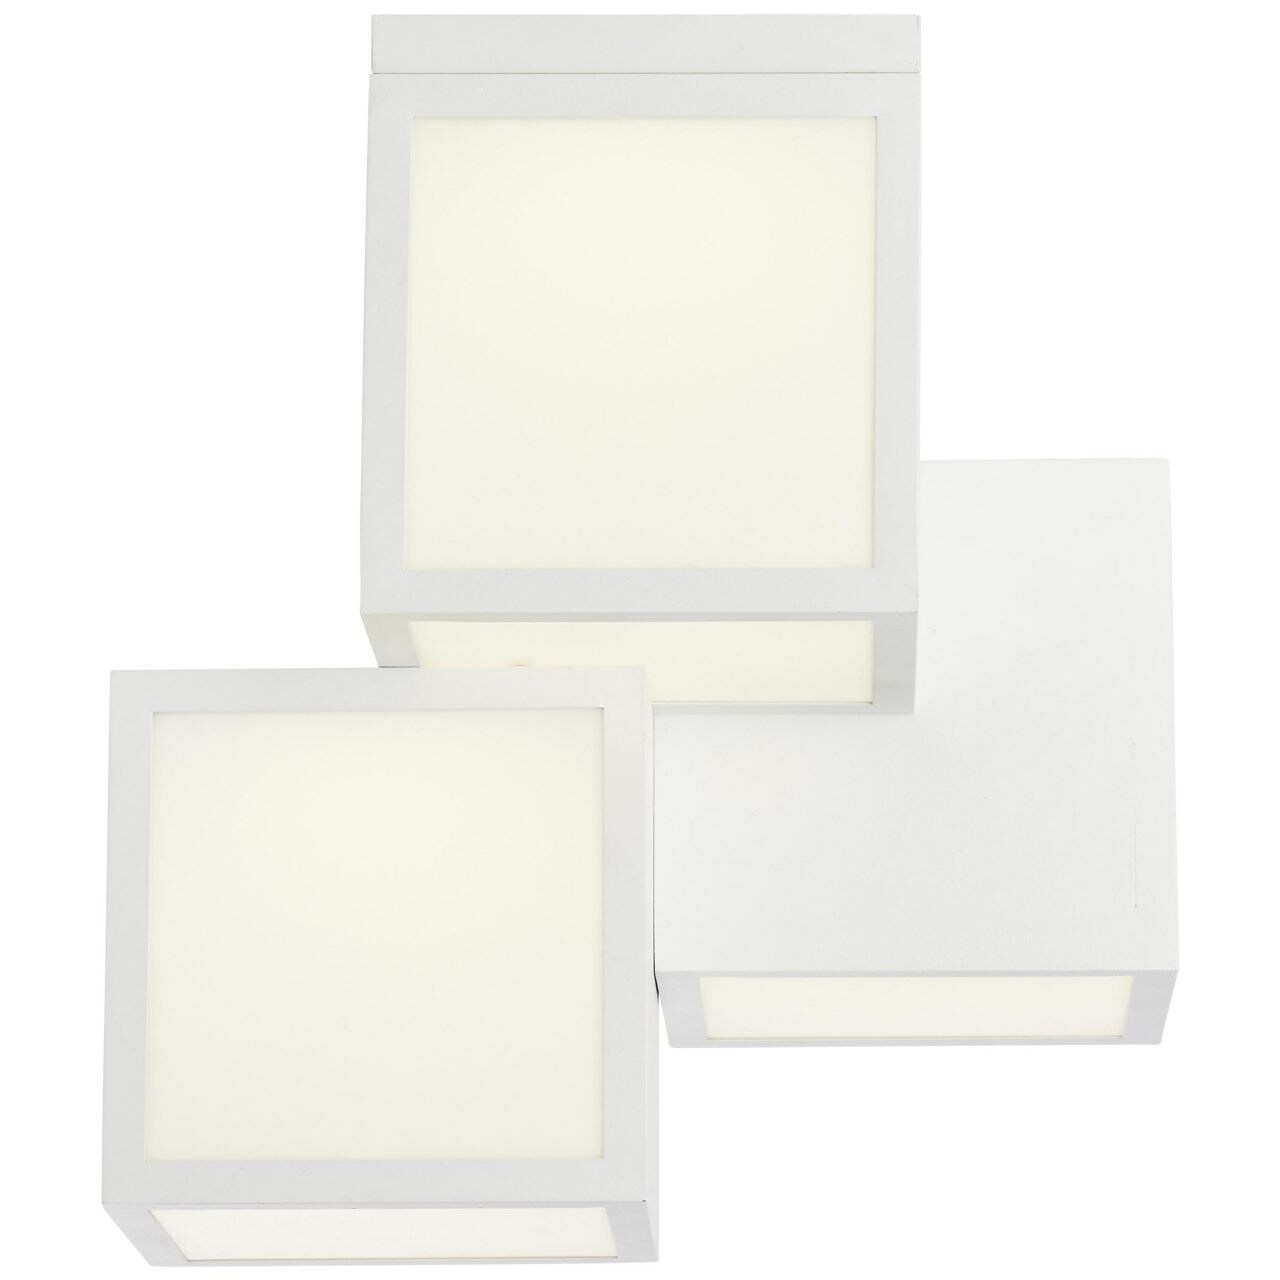 BRILLIANT Lampe, Cubix LED Deckenleuchte 3flg weiß, Metall/Kunststoff, 1x 25W LED integriert, (2400lm, 3000K), A